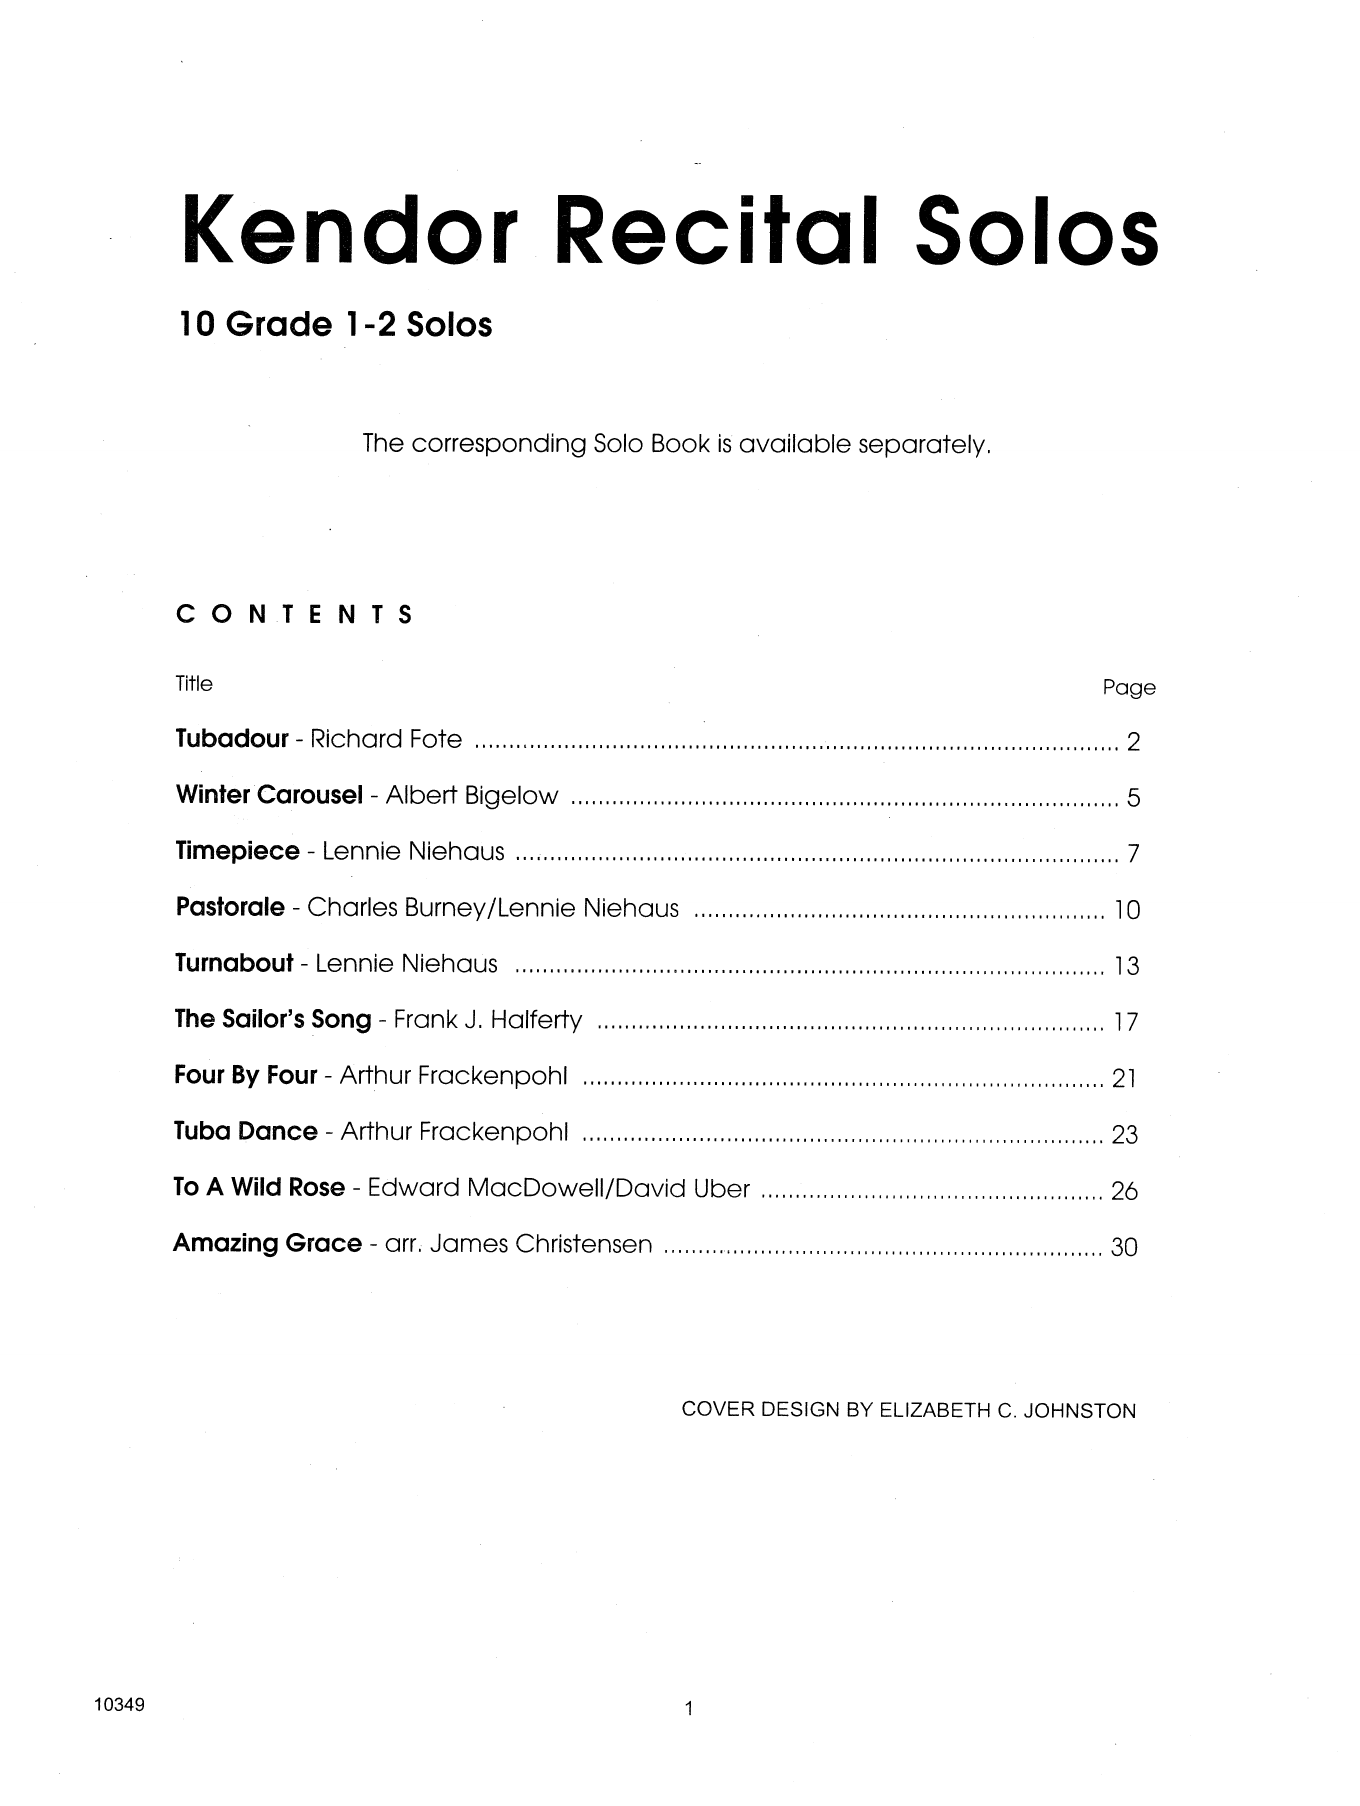 Download Various Kendor Recital Solos - Tuba - (Piano Ac Sheet Music